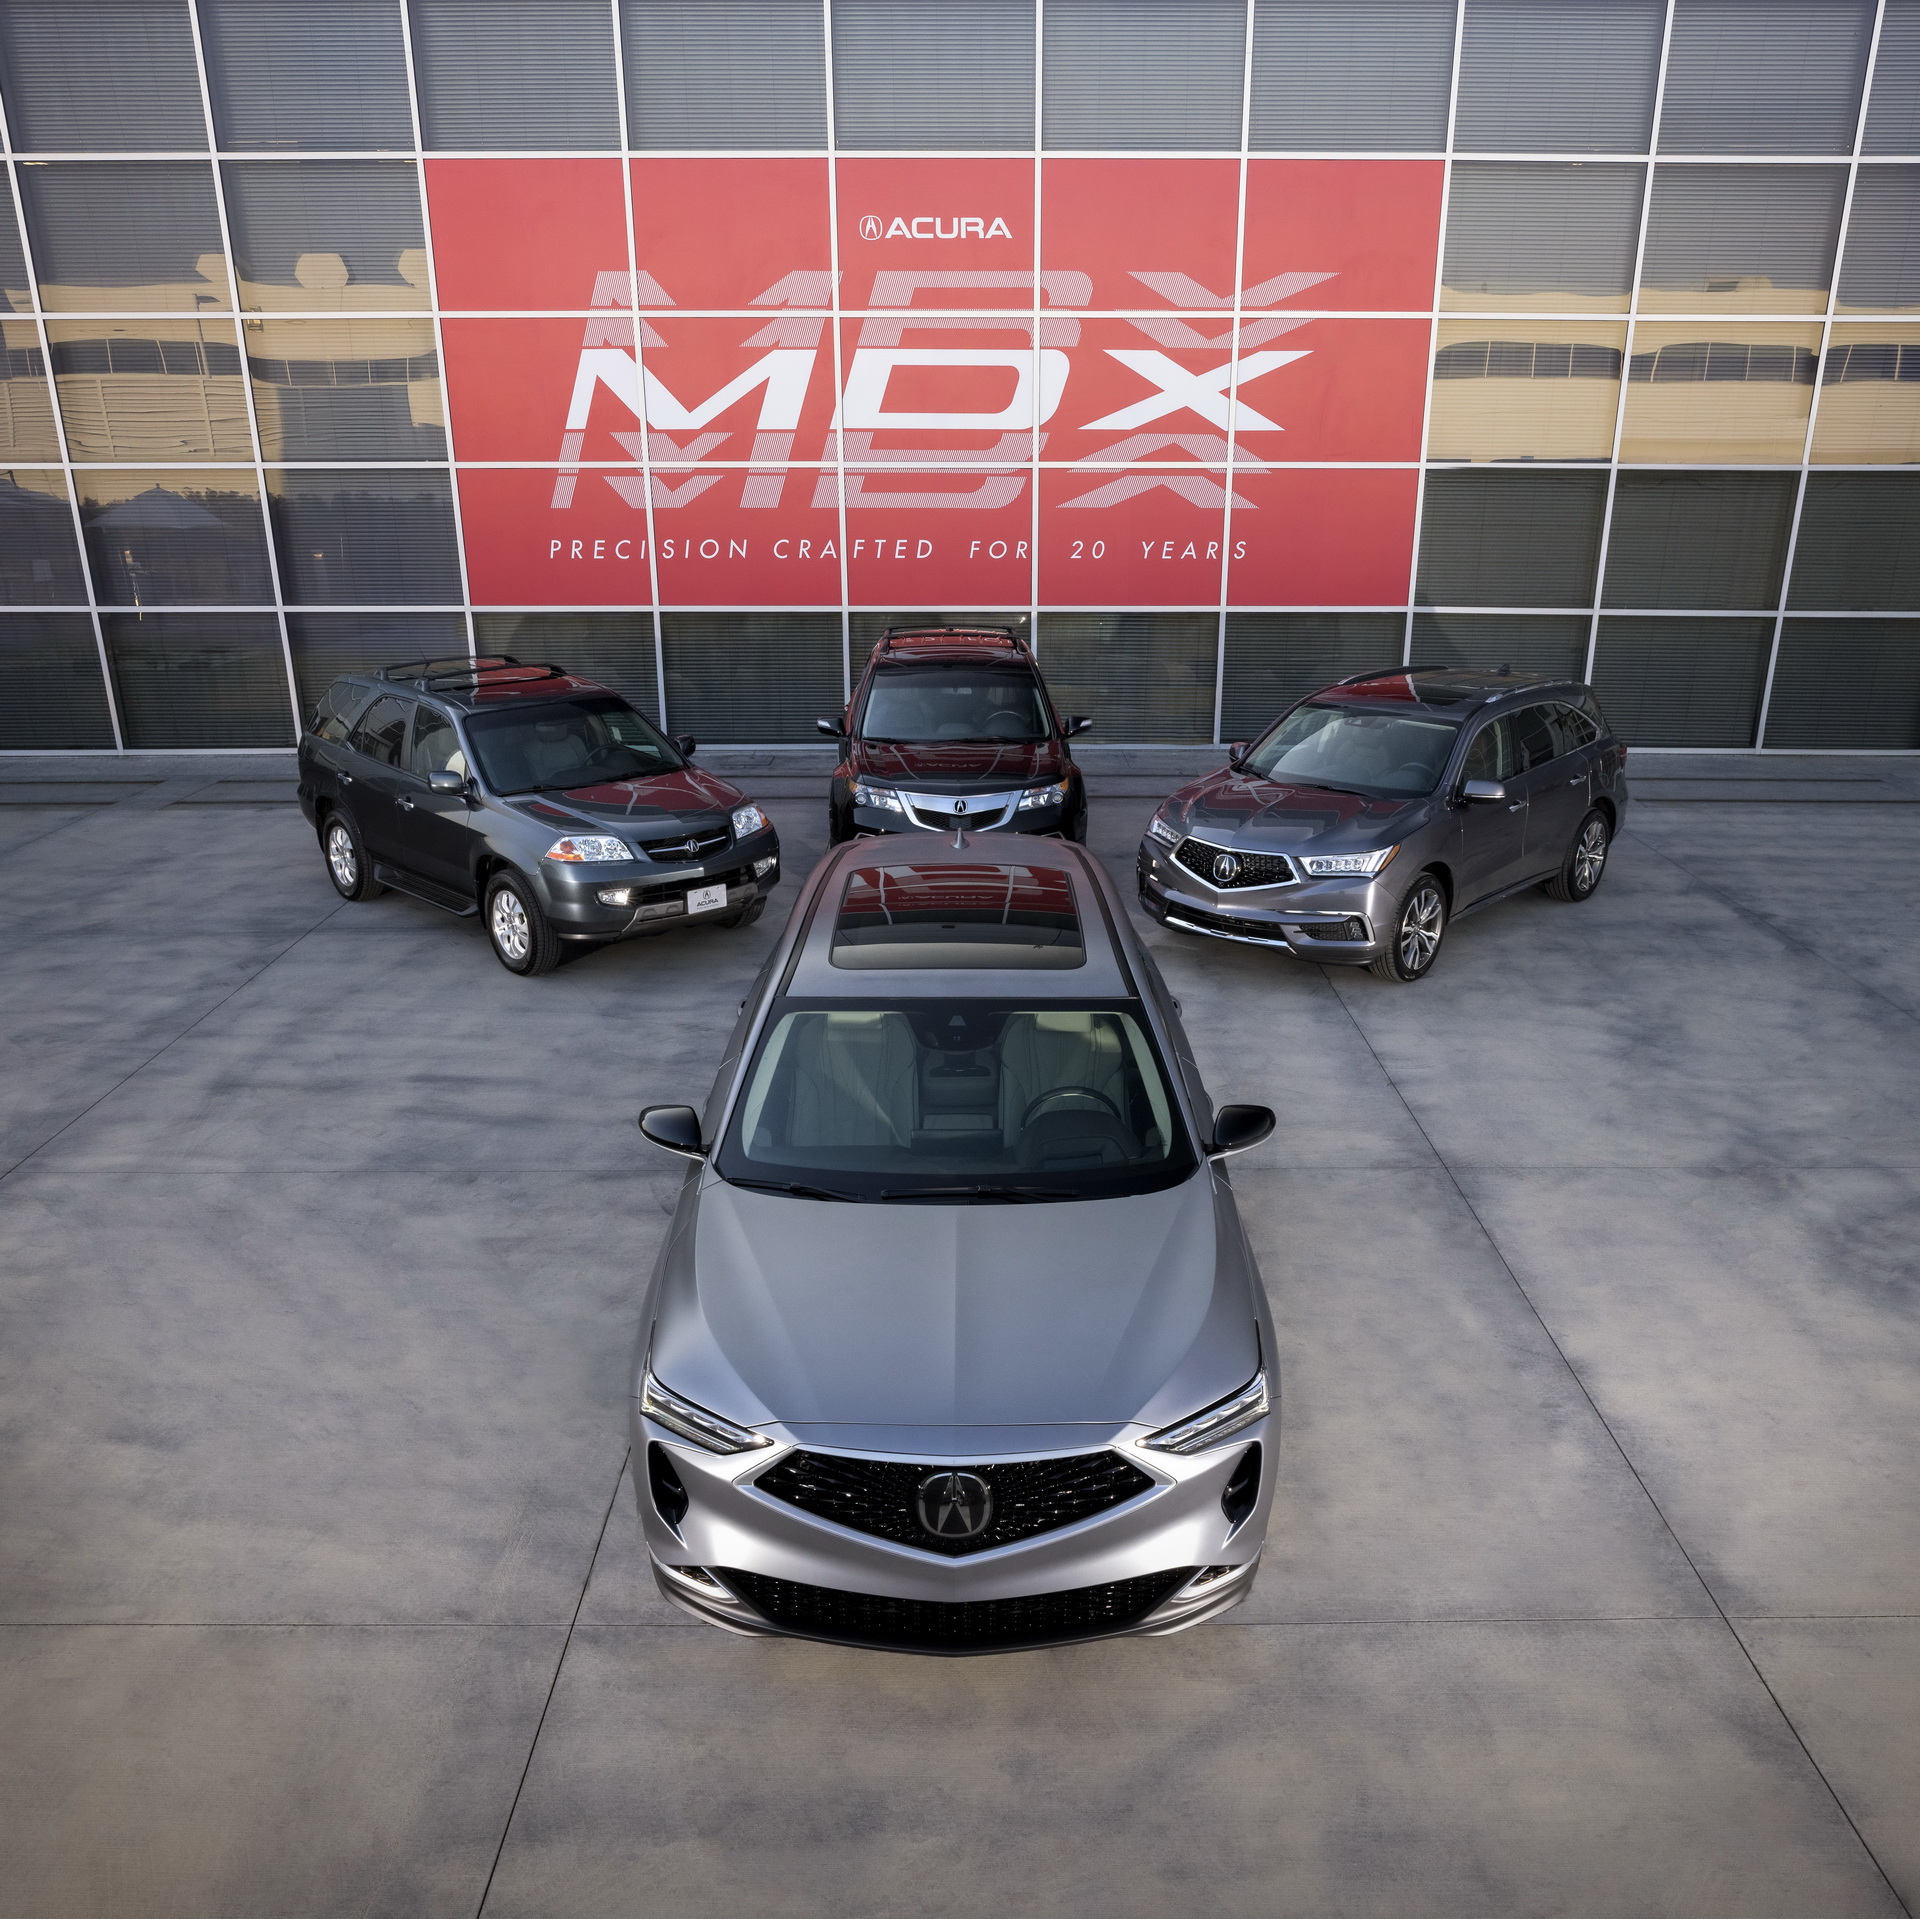 Acura MDX 2022 bắt đầu được sản xuất, giá tử 46.900 USD acura-mdx-20-years-innovation-58.jpg